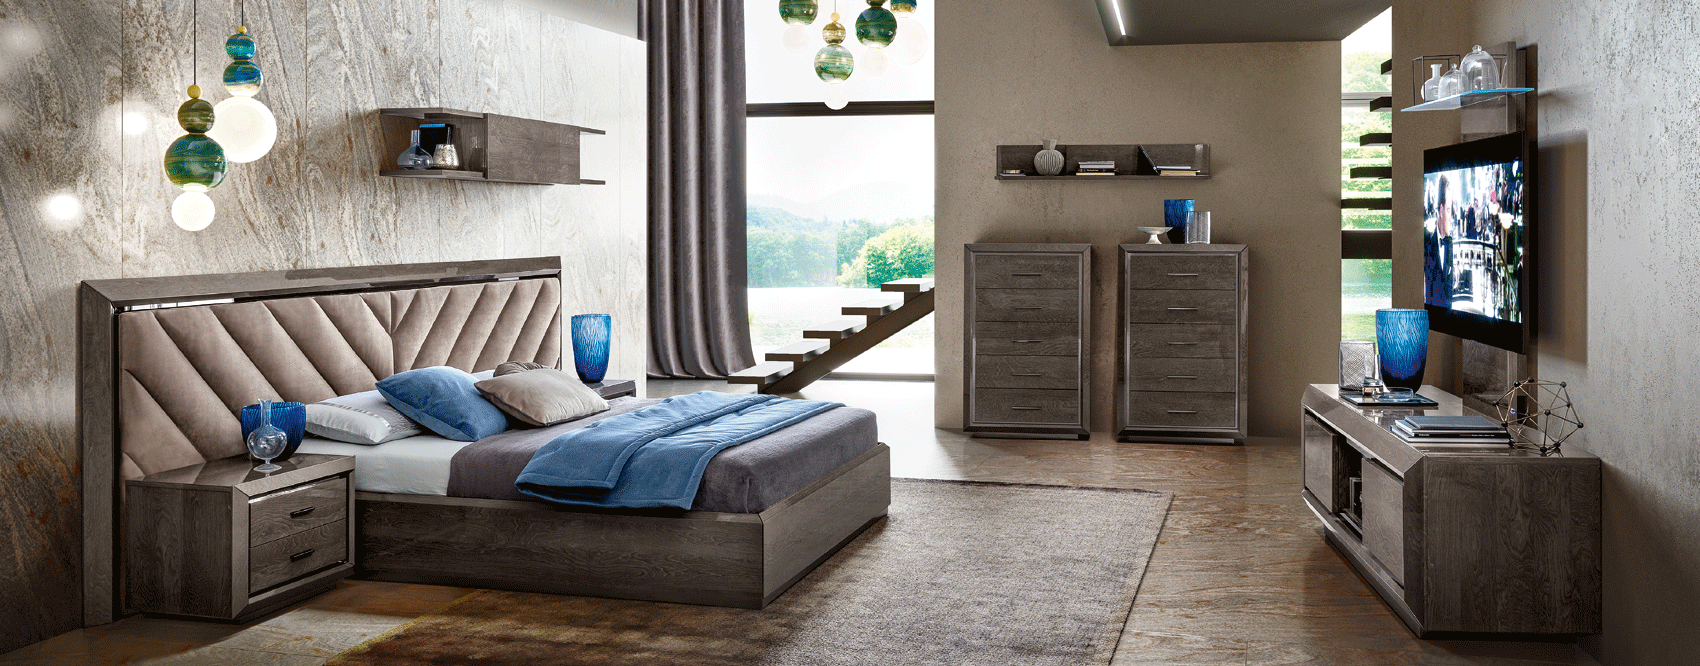 Bedroom Furniture Beds Elite Night "BOISERIE" Additional Items